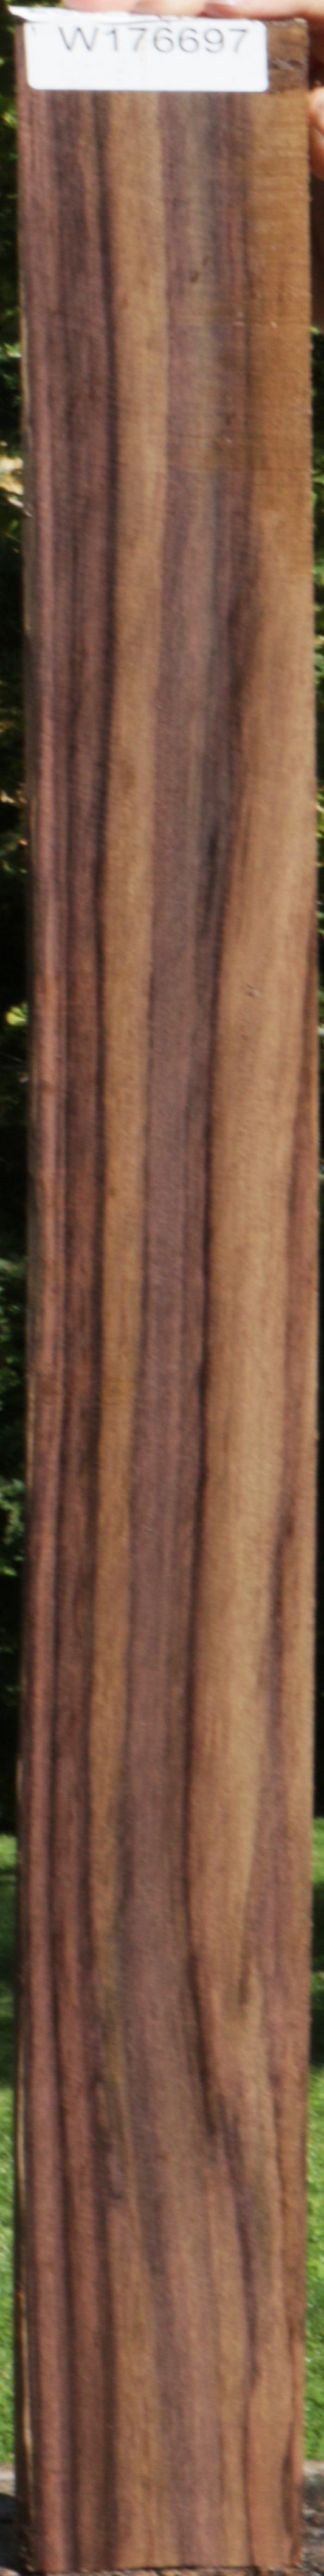 East Indian Rosewood Lumber